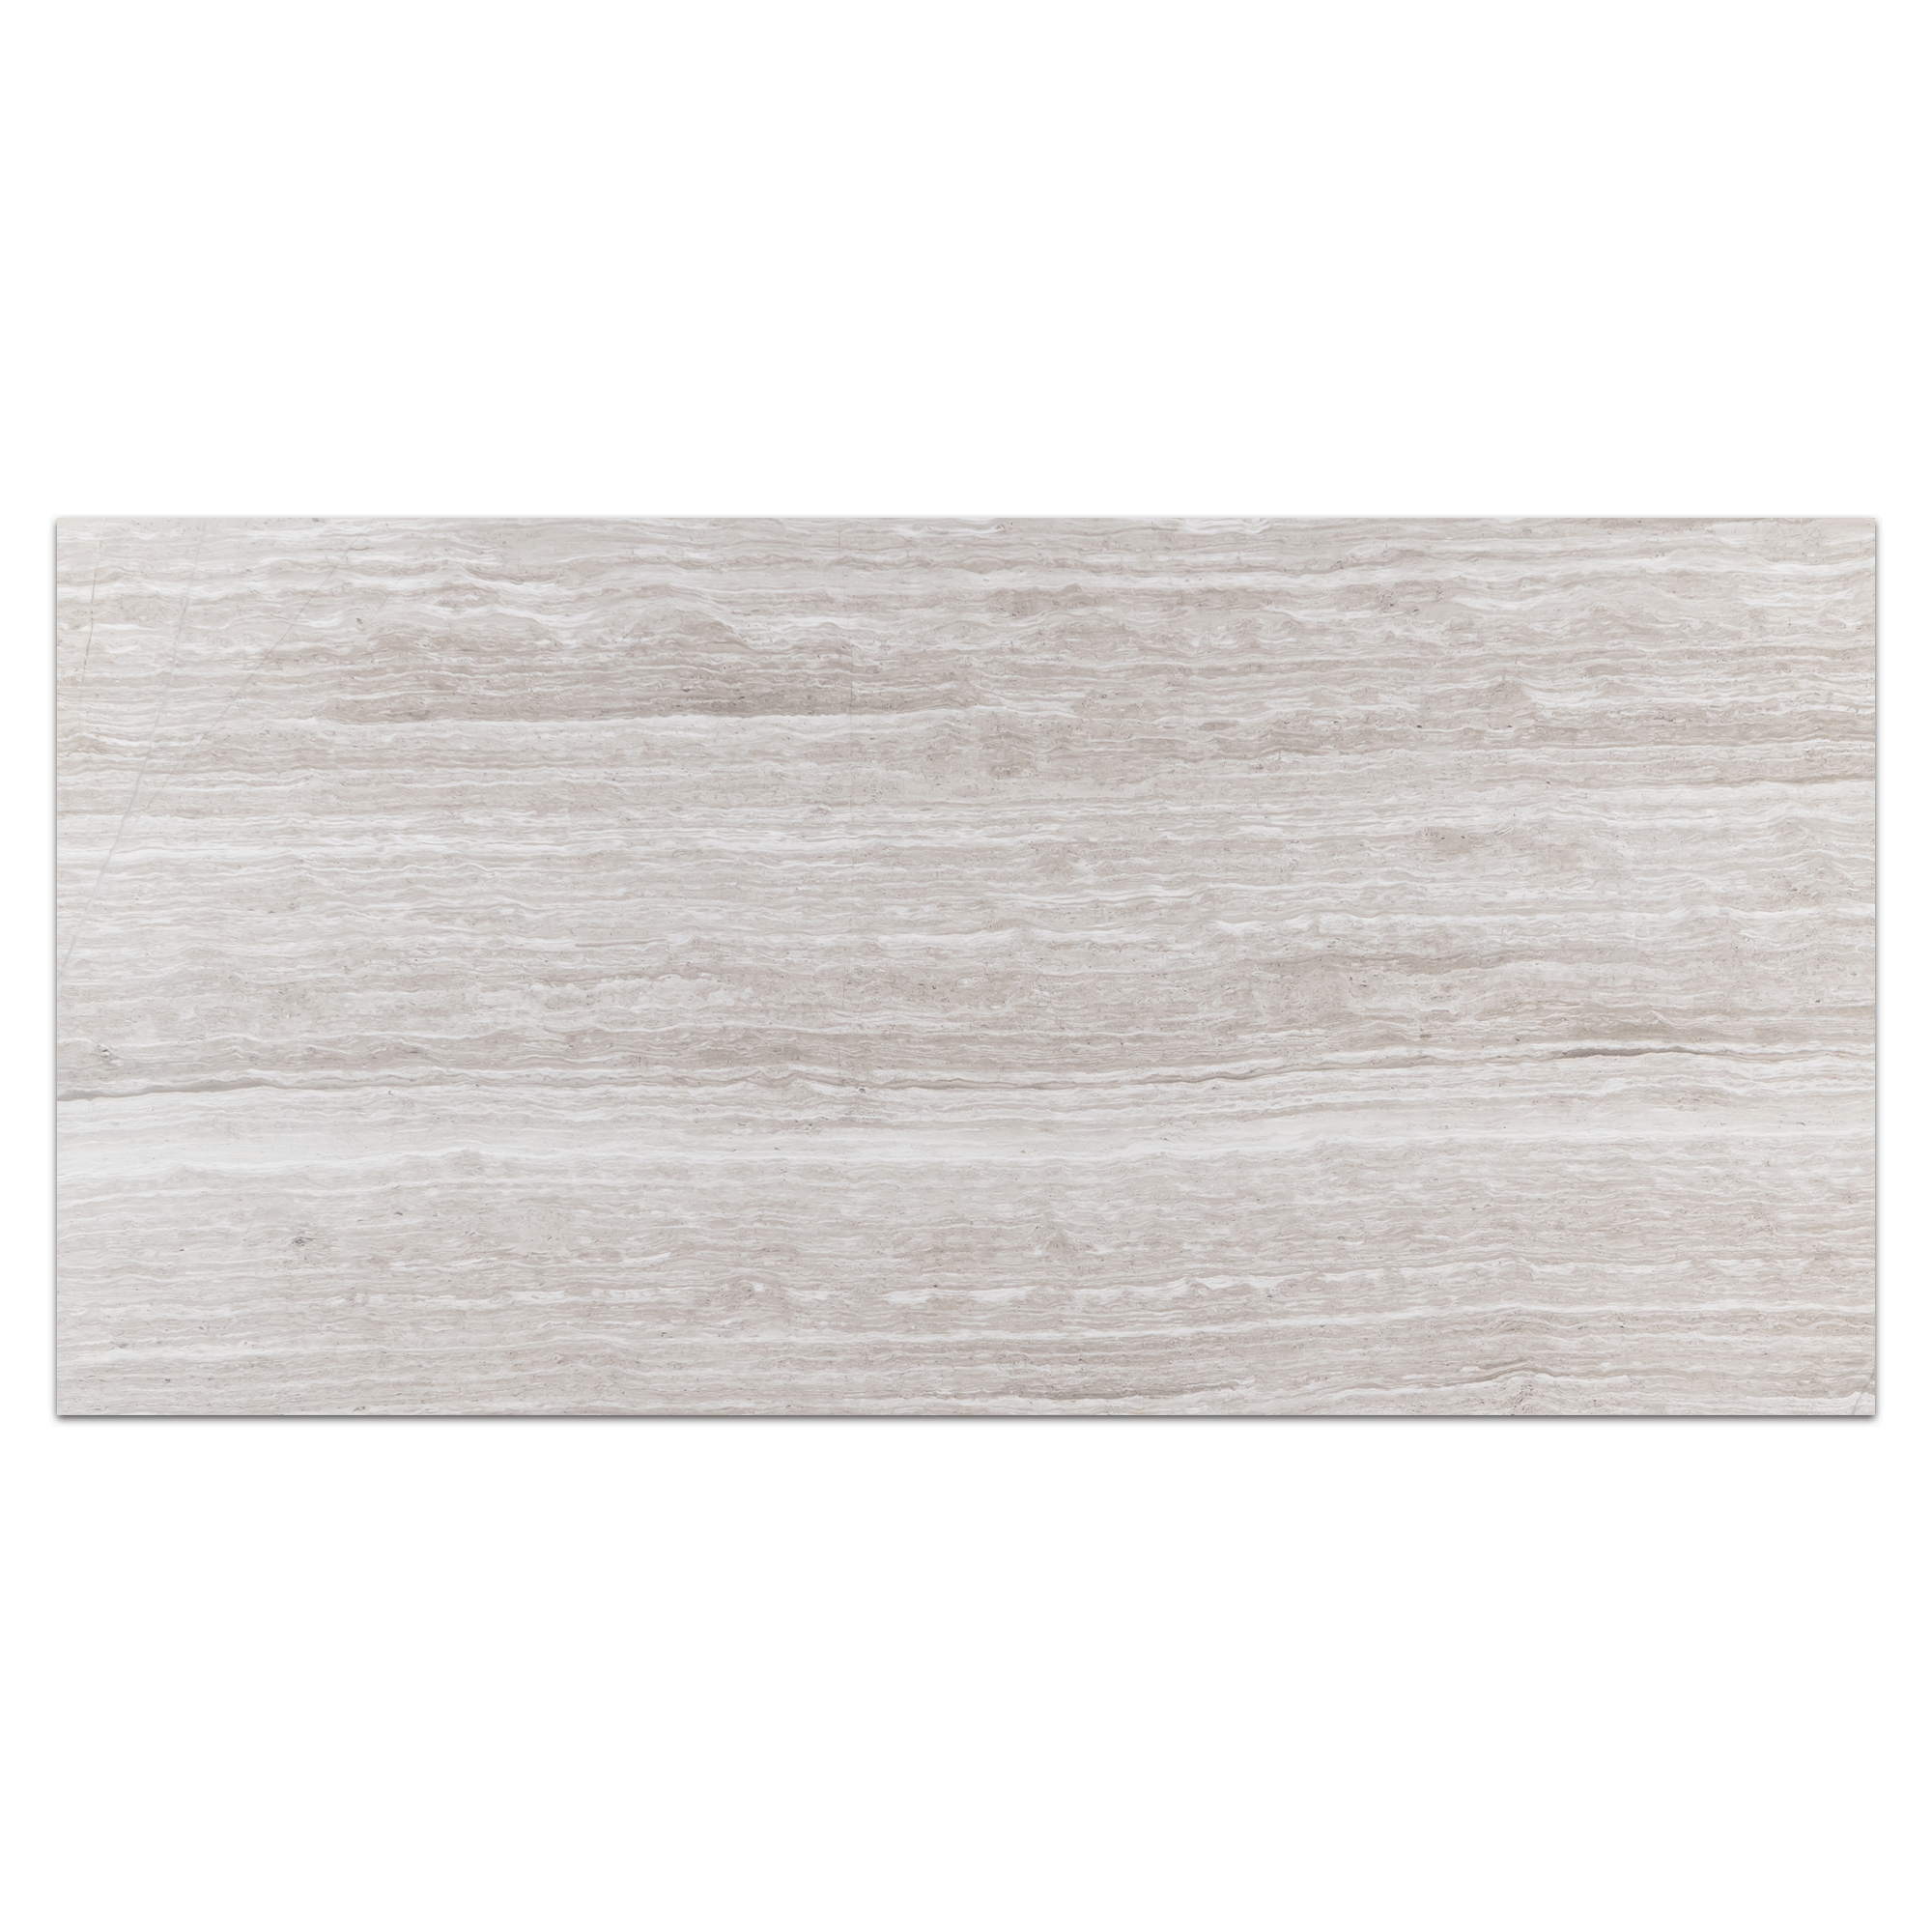 Elon Beachwood Marble Vein Cut Rectangle Field Tile 12x23.625x0.375 Honed - Surface Group International